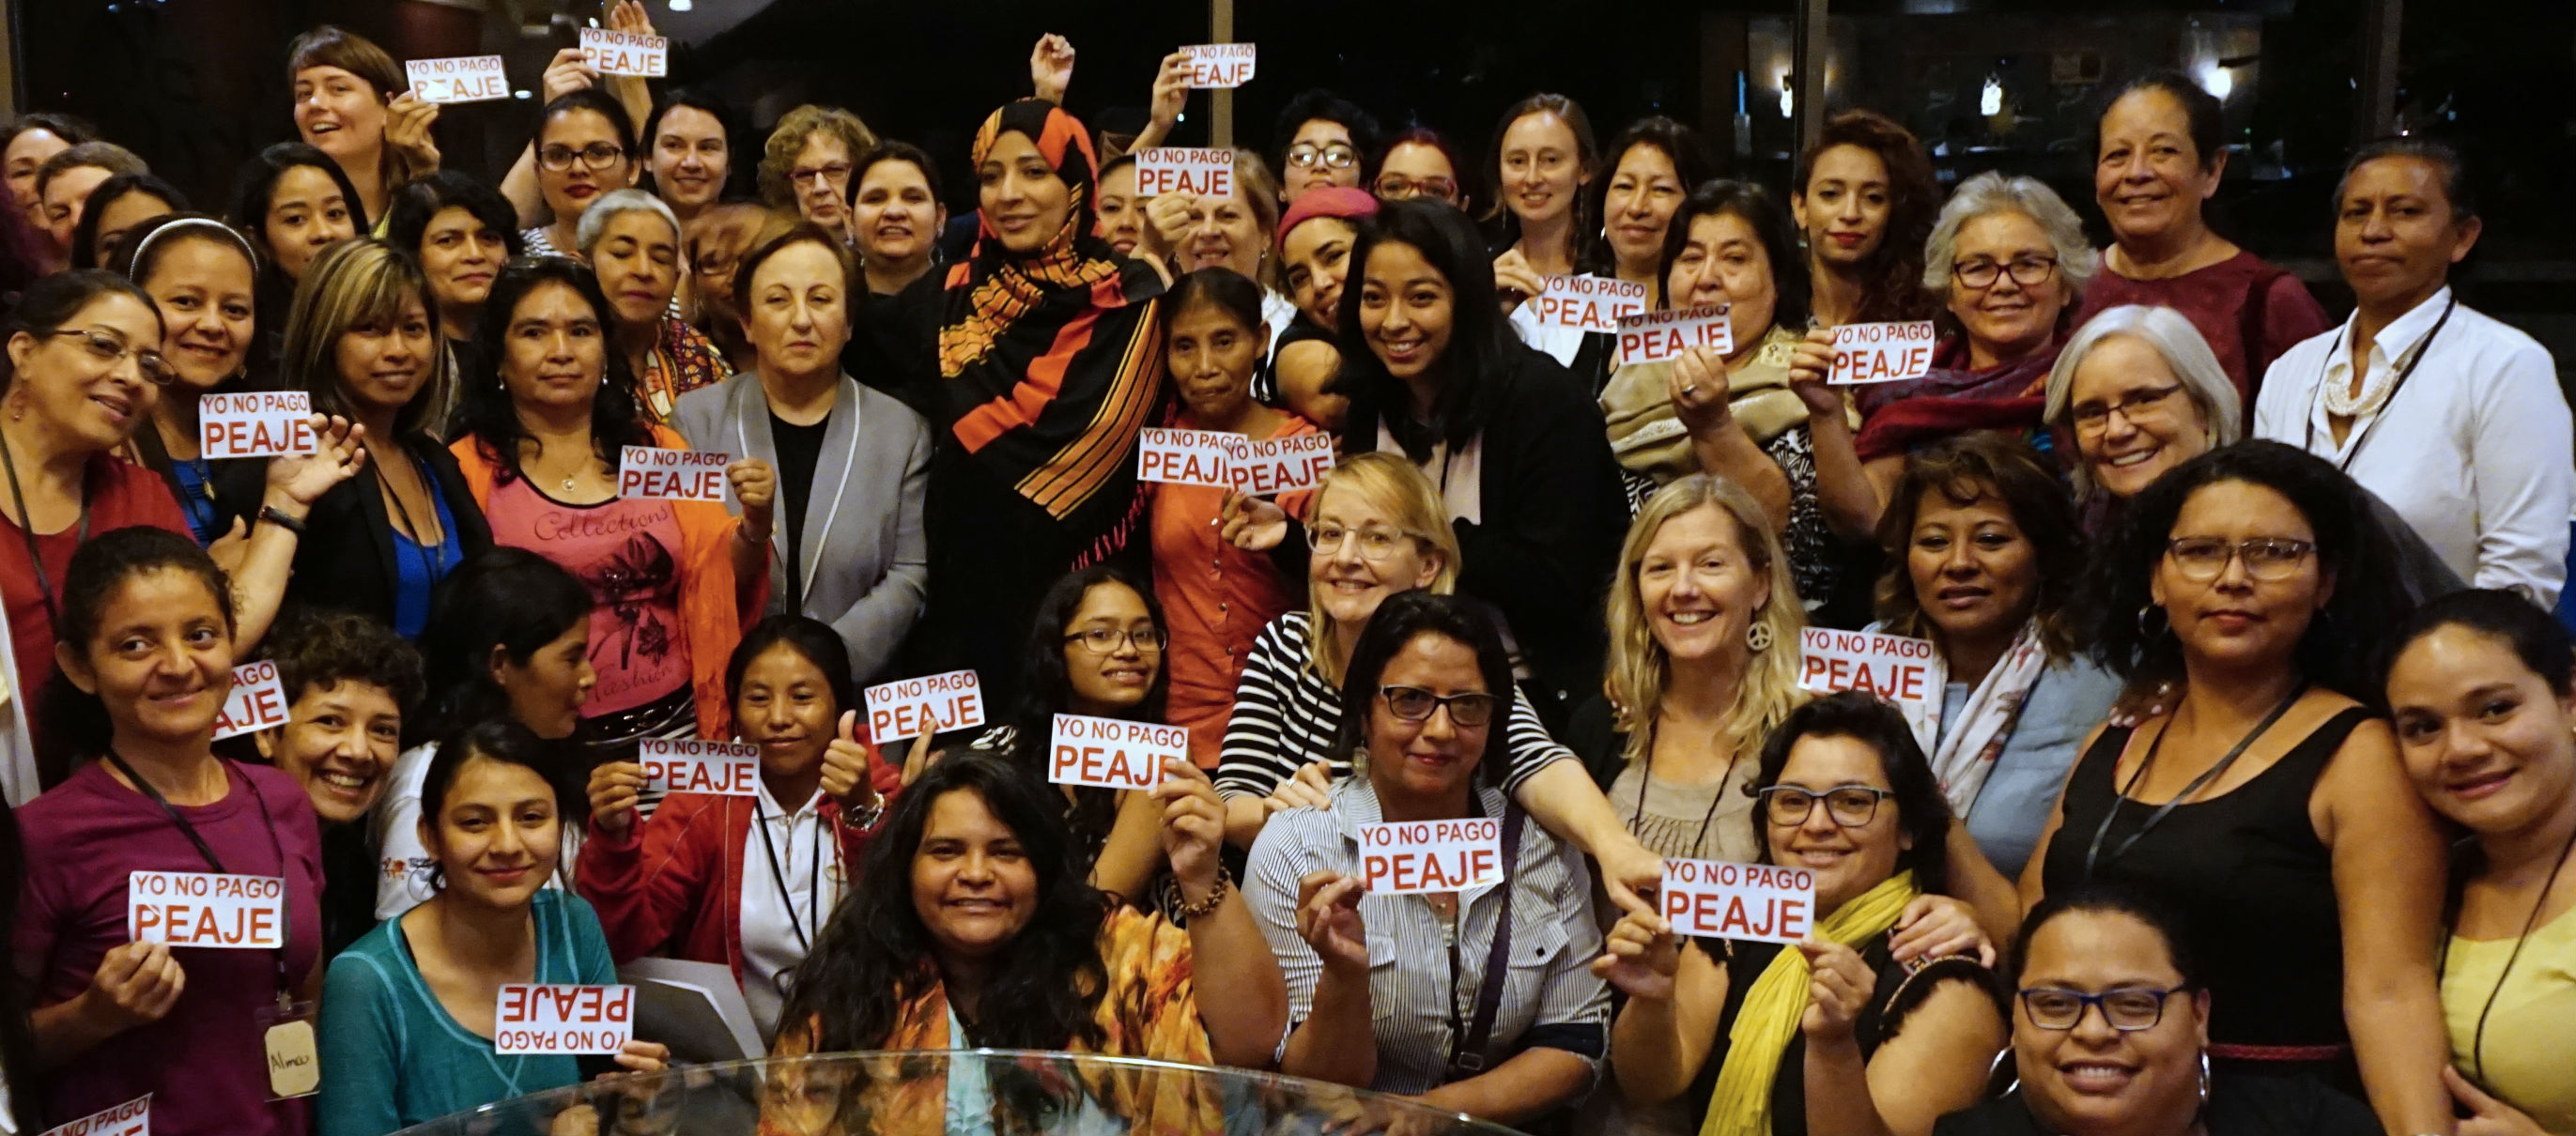 Women Land Peace, Nobel Women's Initiative, Tawakkol Karmen, Honduras, Tegucigalpa, Berta Cáceres